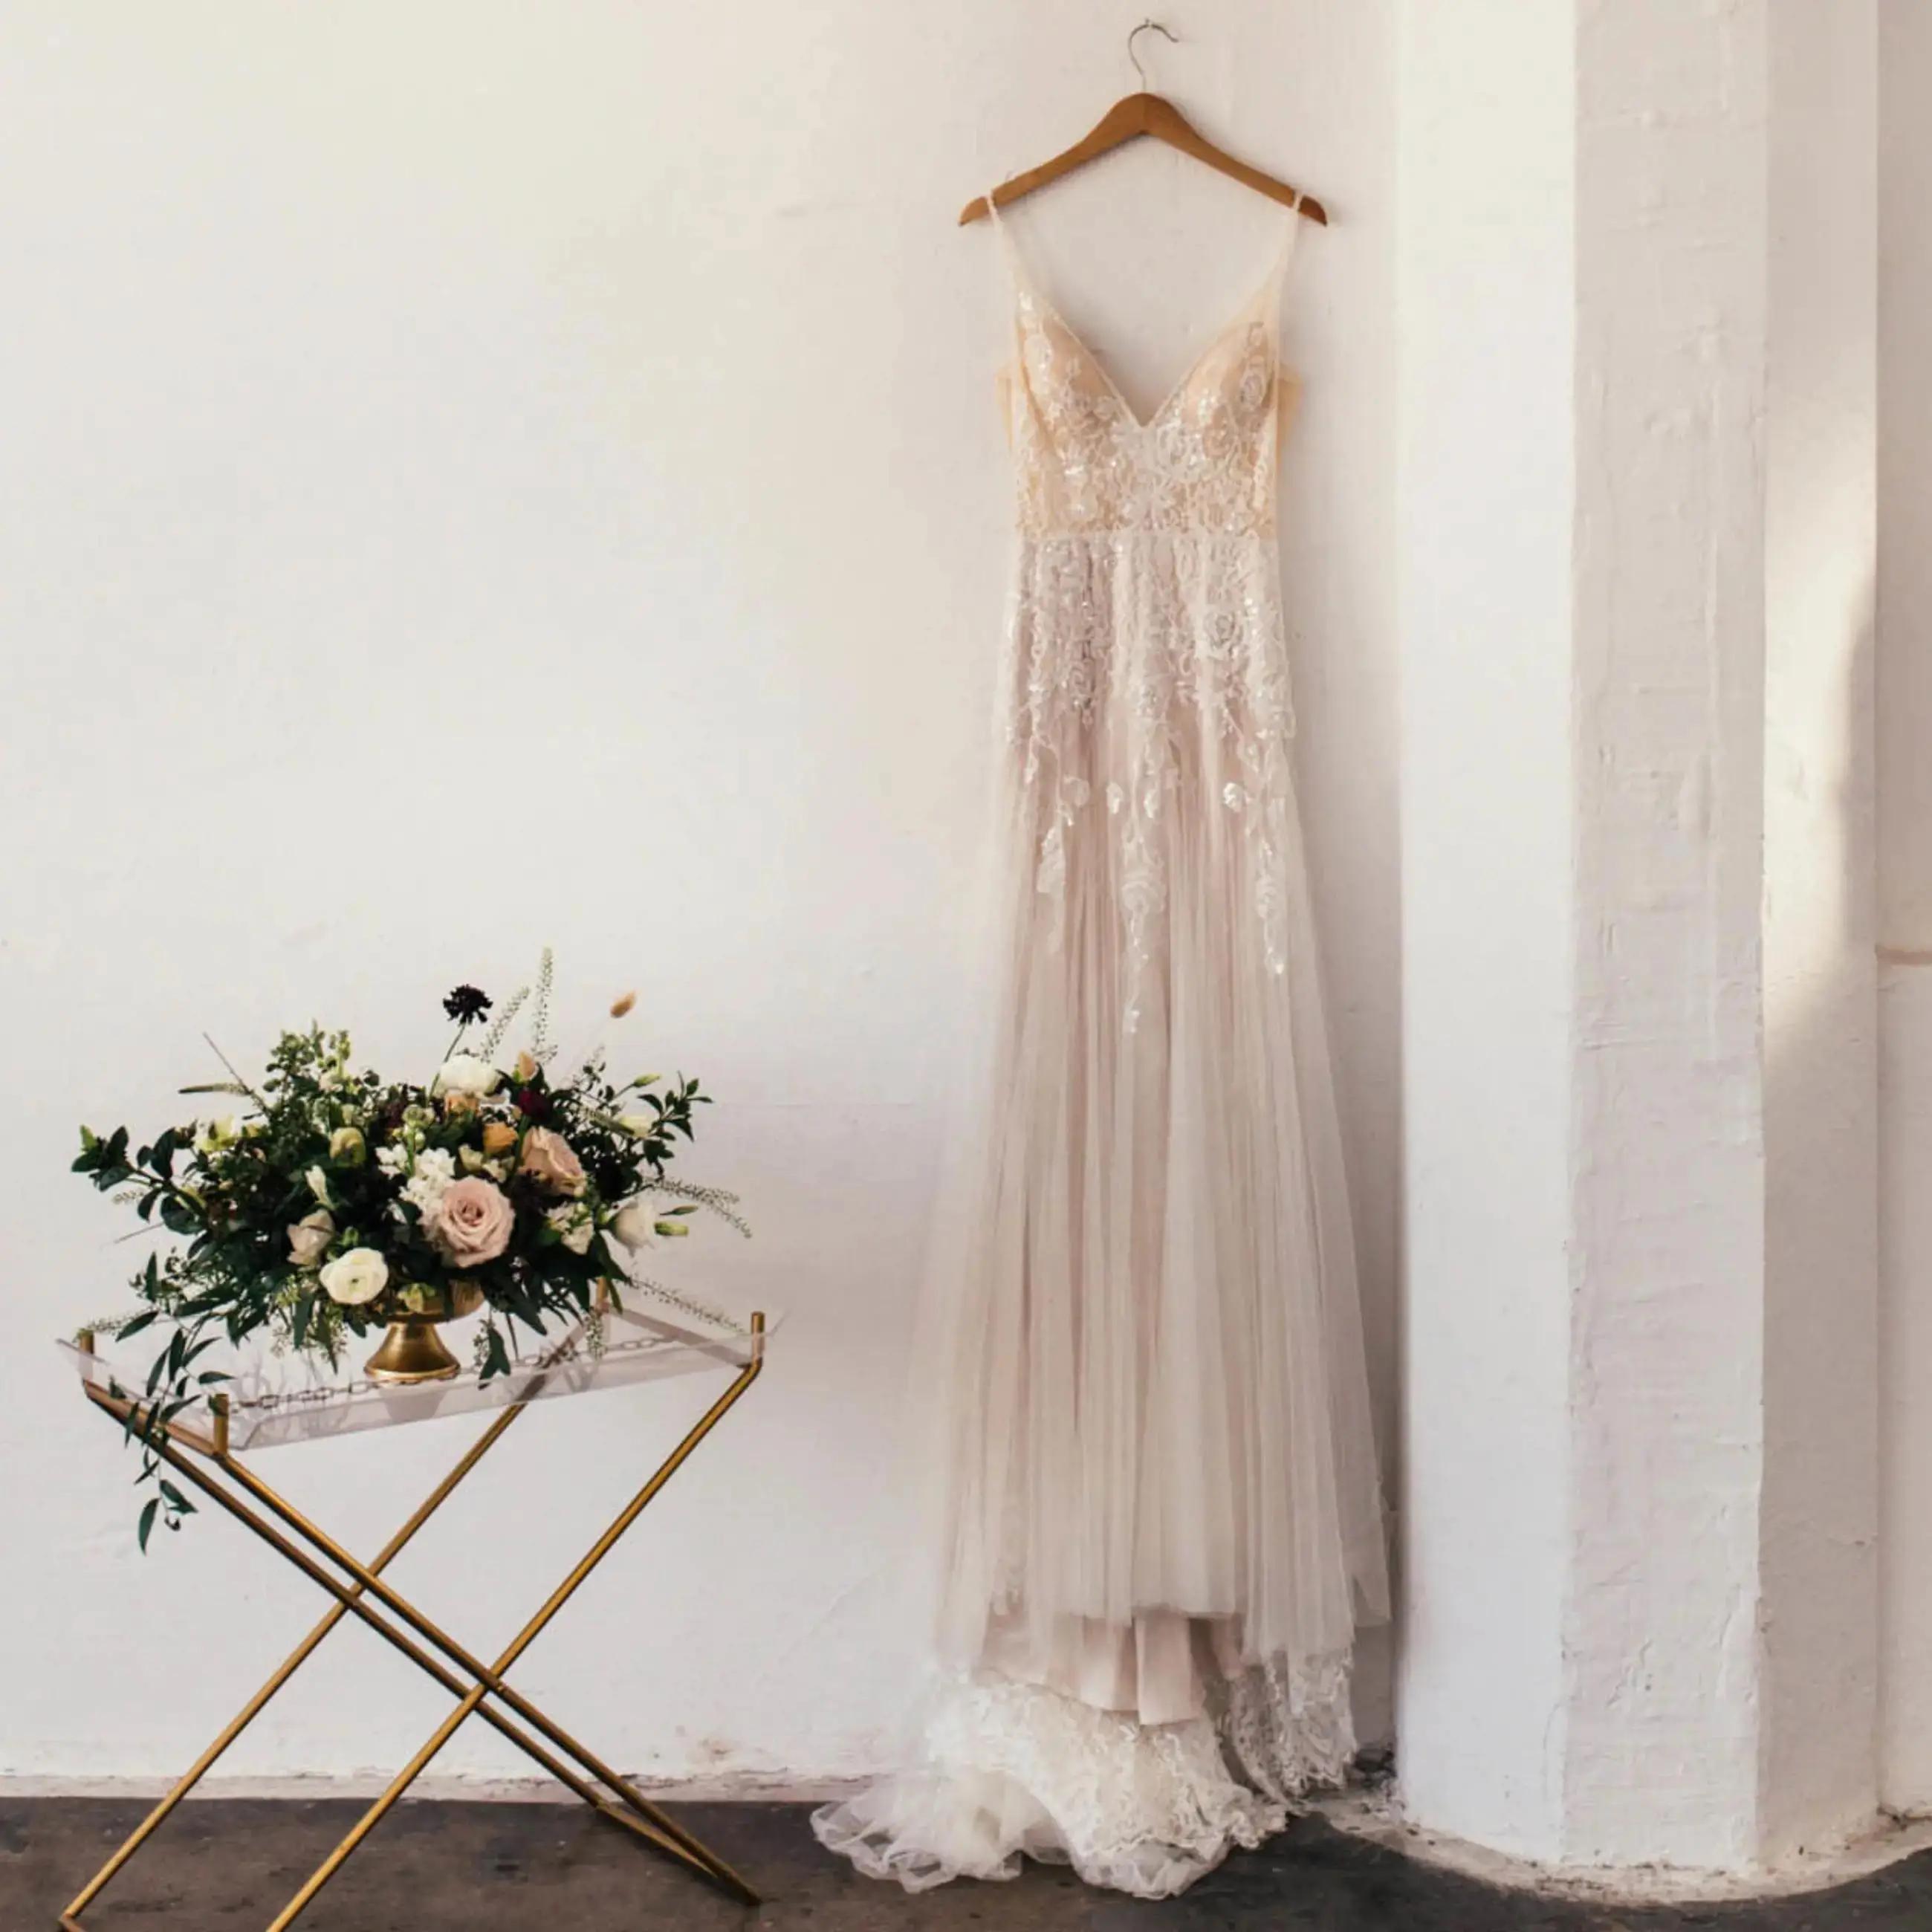 Bridal Tips from Bridal Elegance Studio for Your Wedding Image